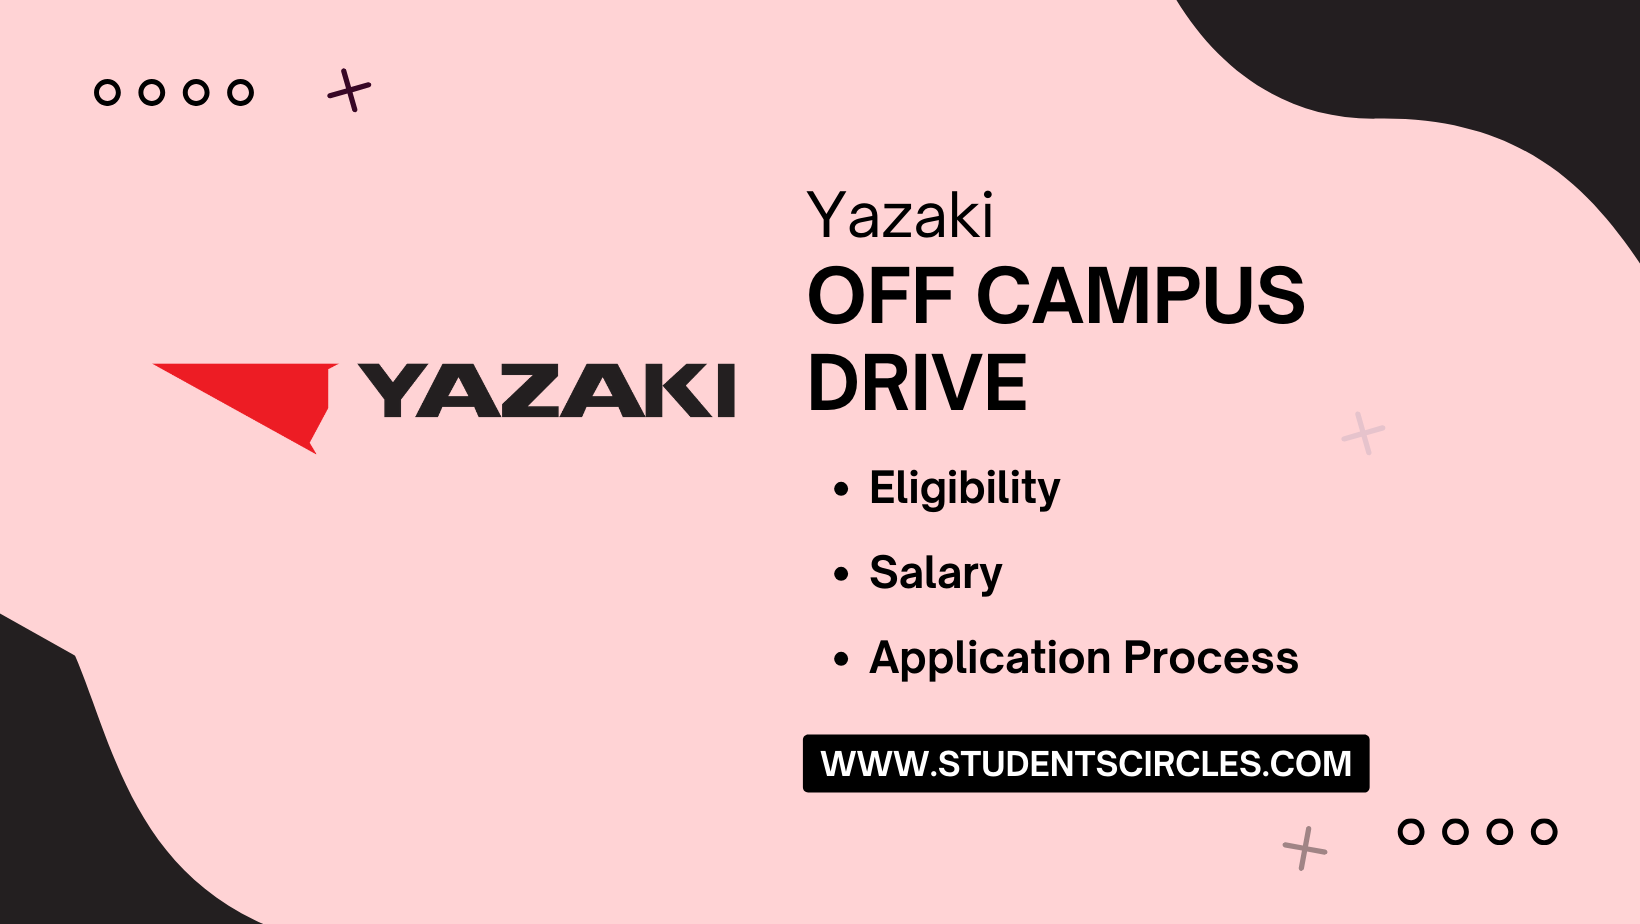 Yazaki Off Campus Drive